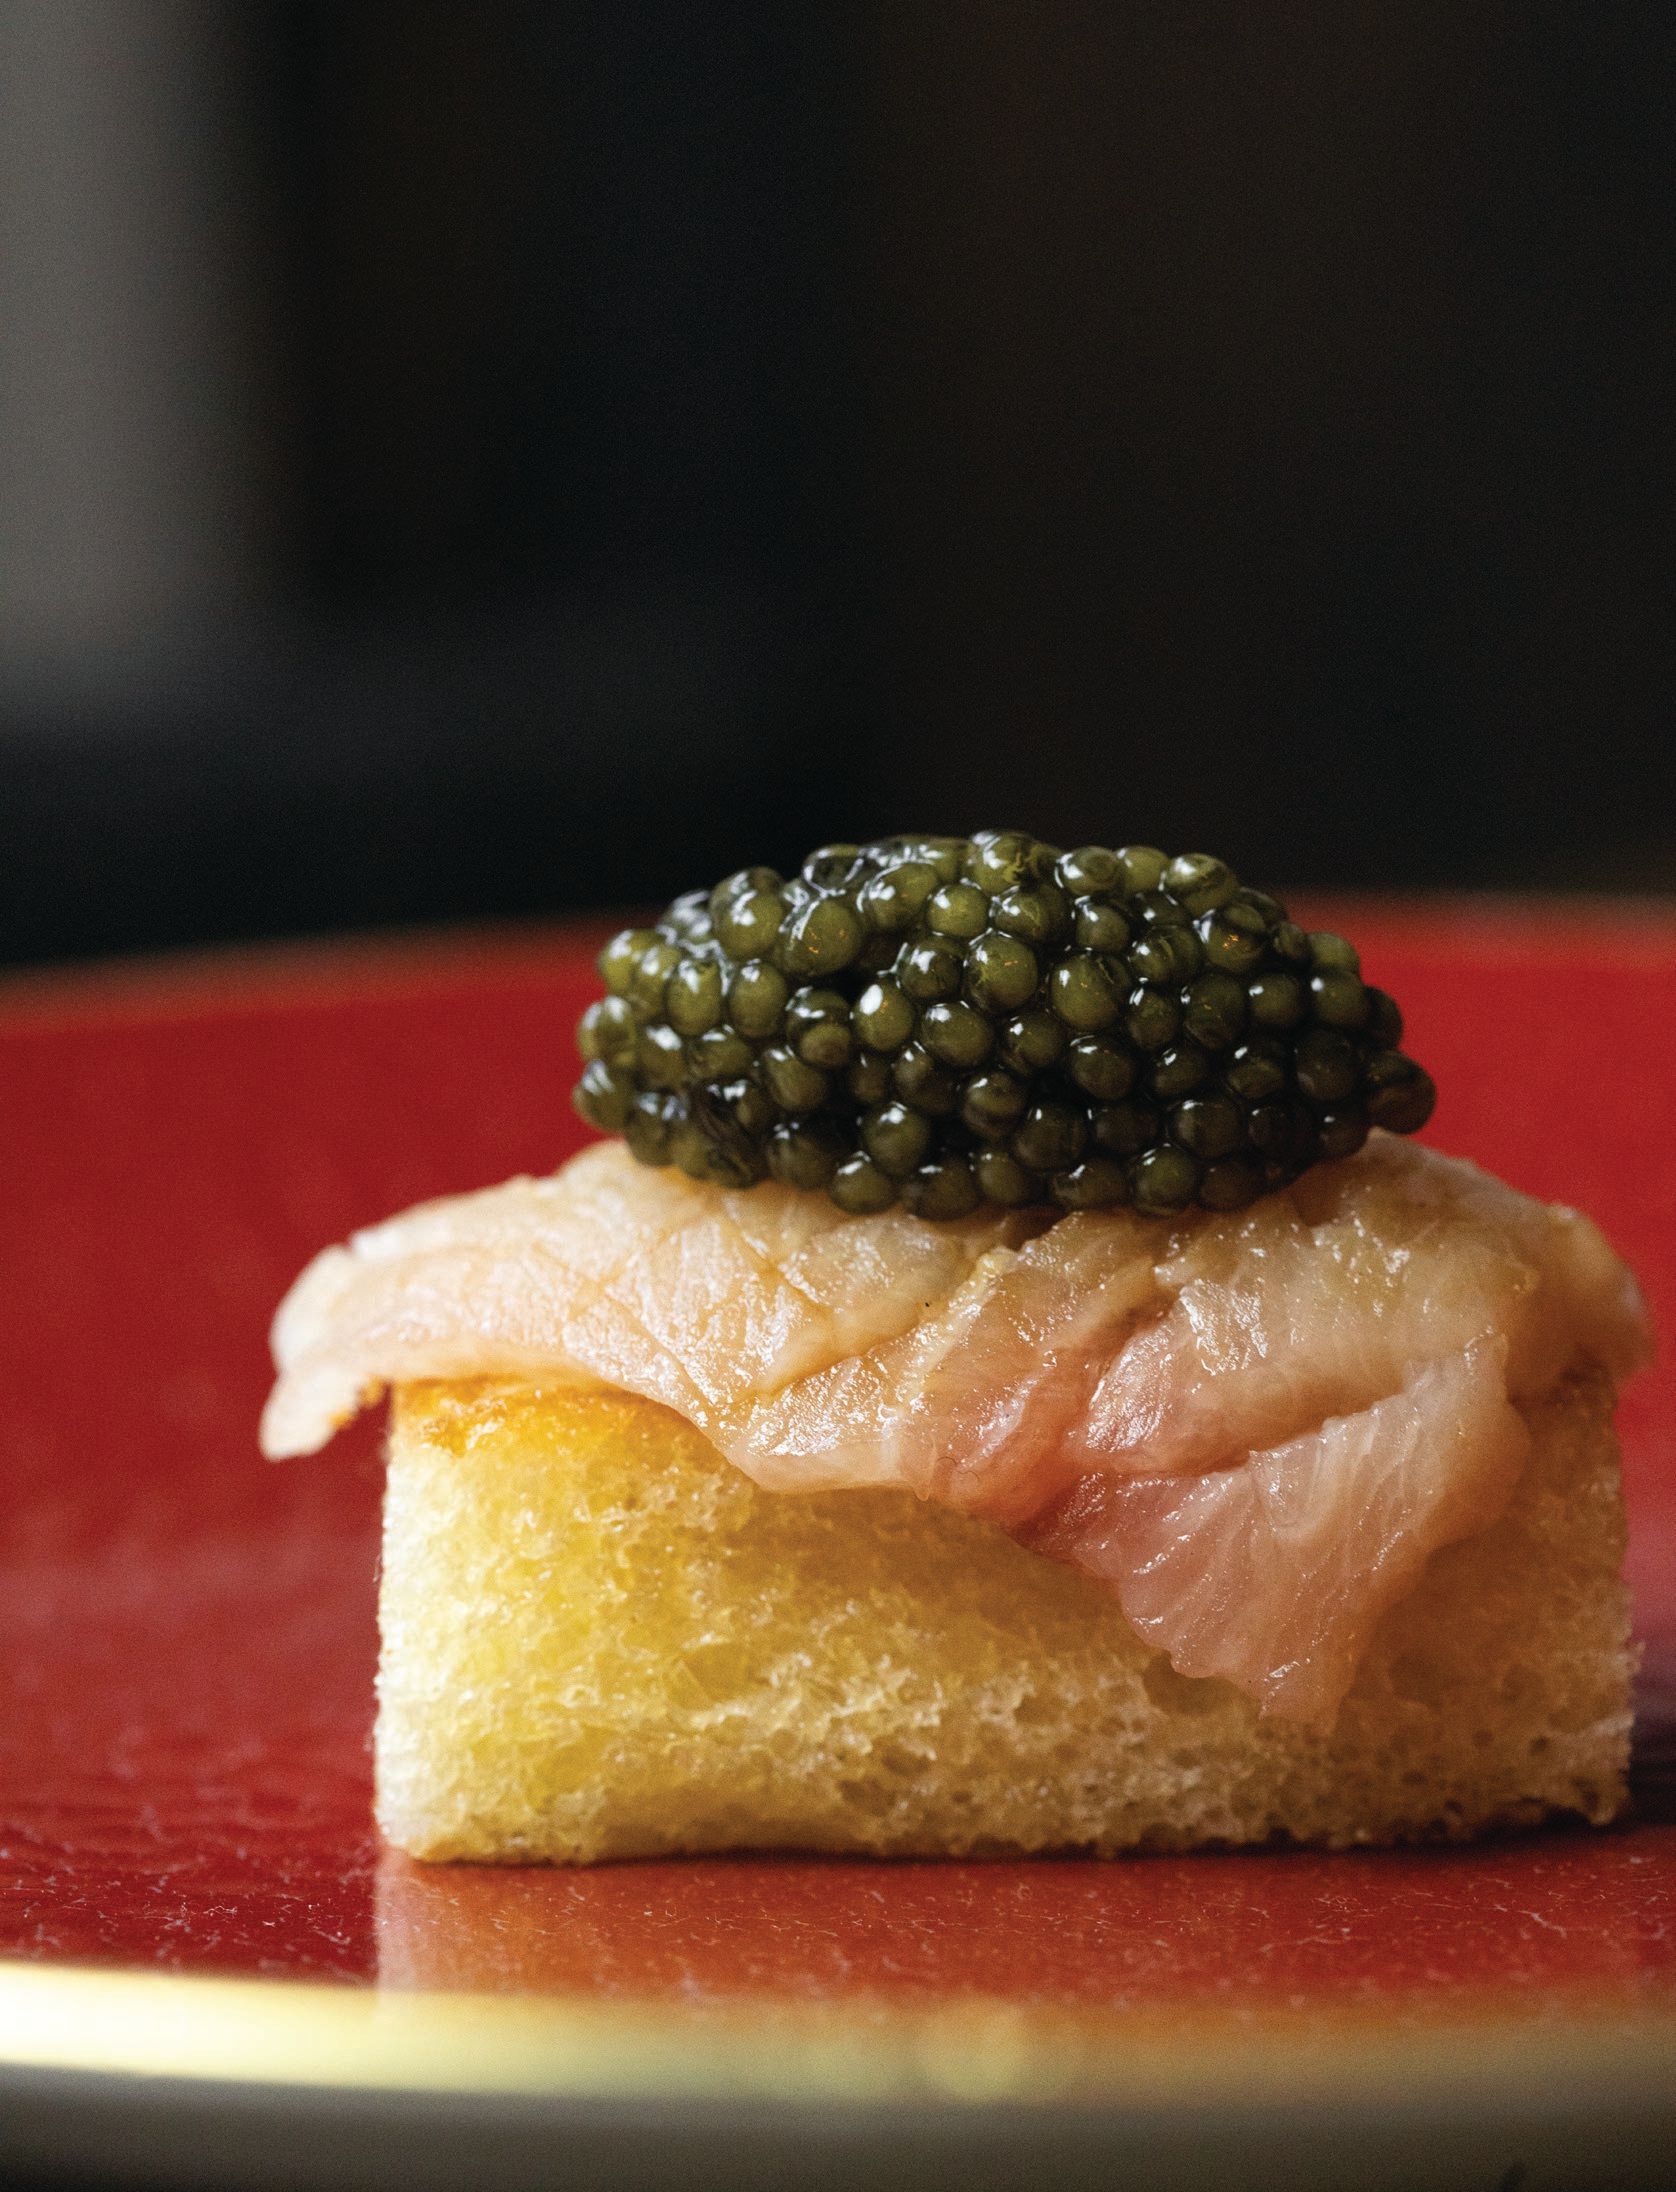 Dryaged shima aji with osetra caviar.  Photographed by Natalie Black